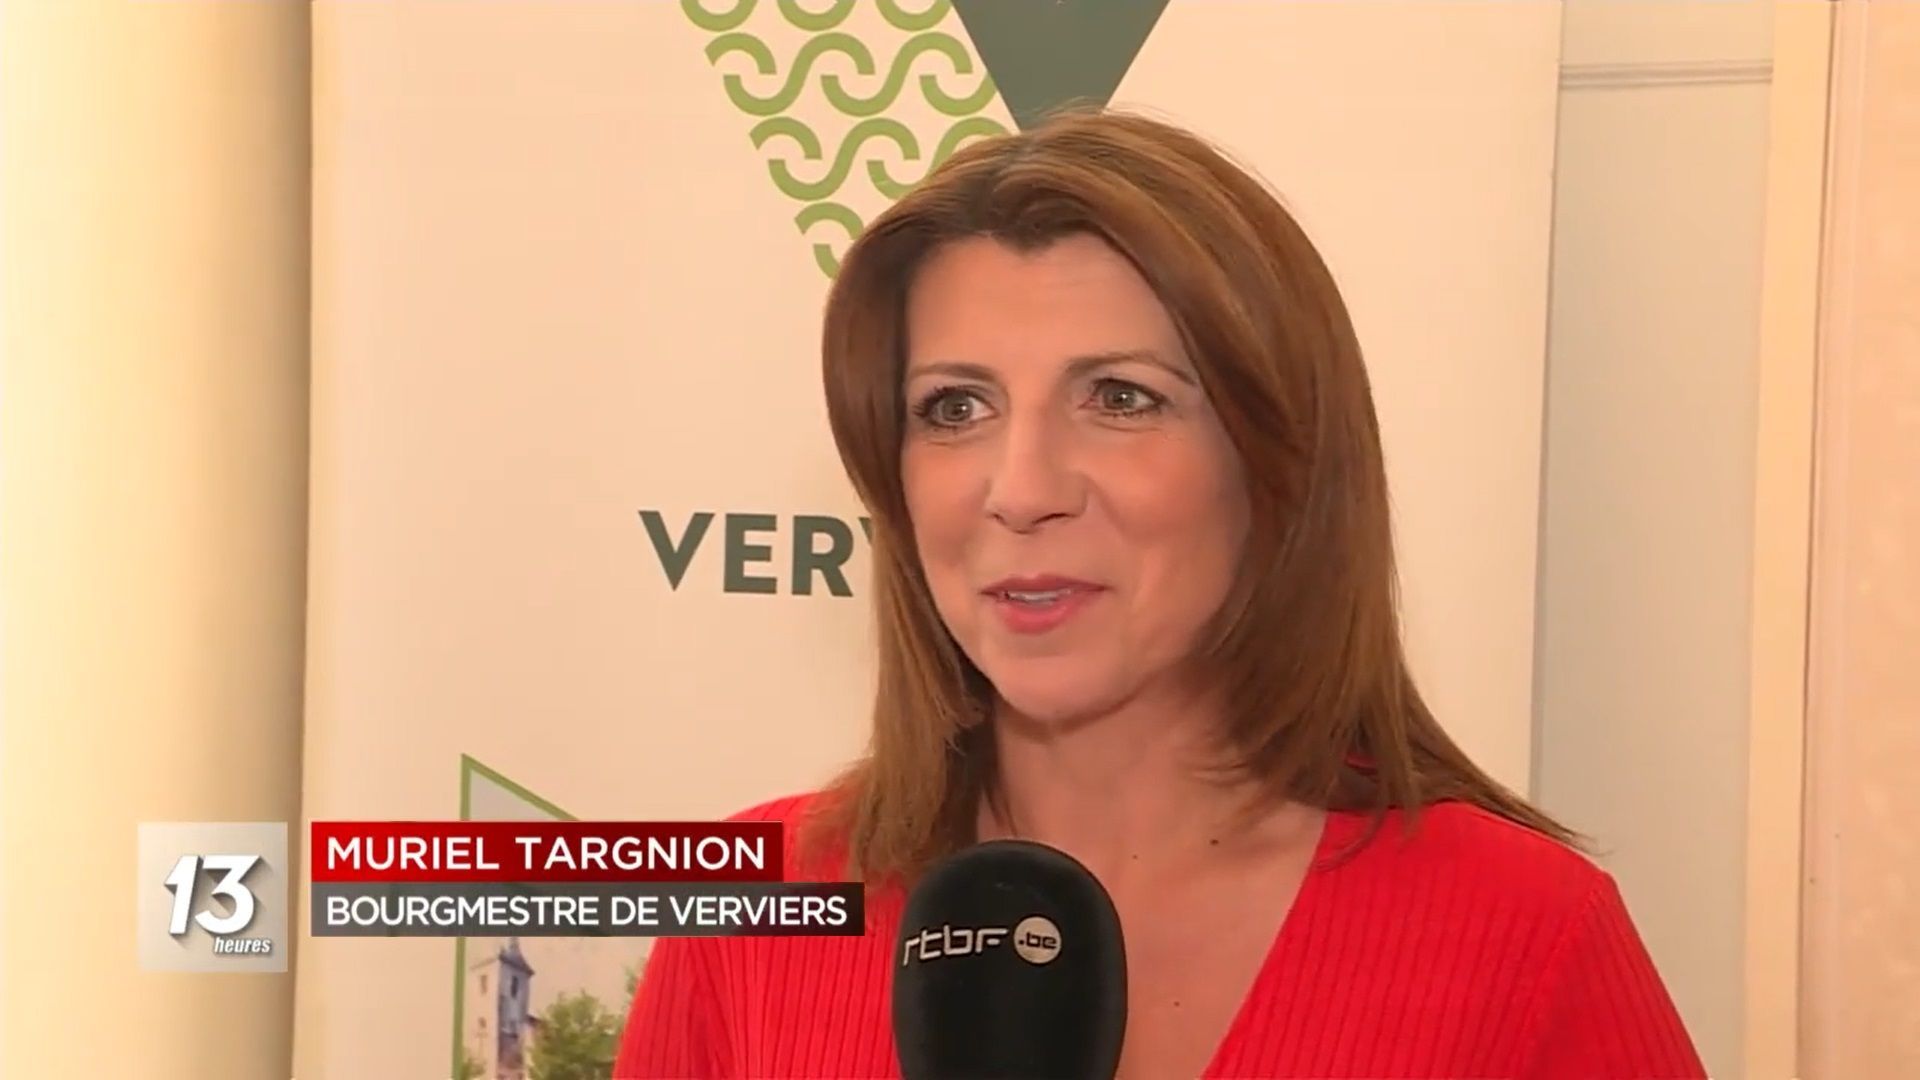 Muriel Targnion